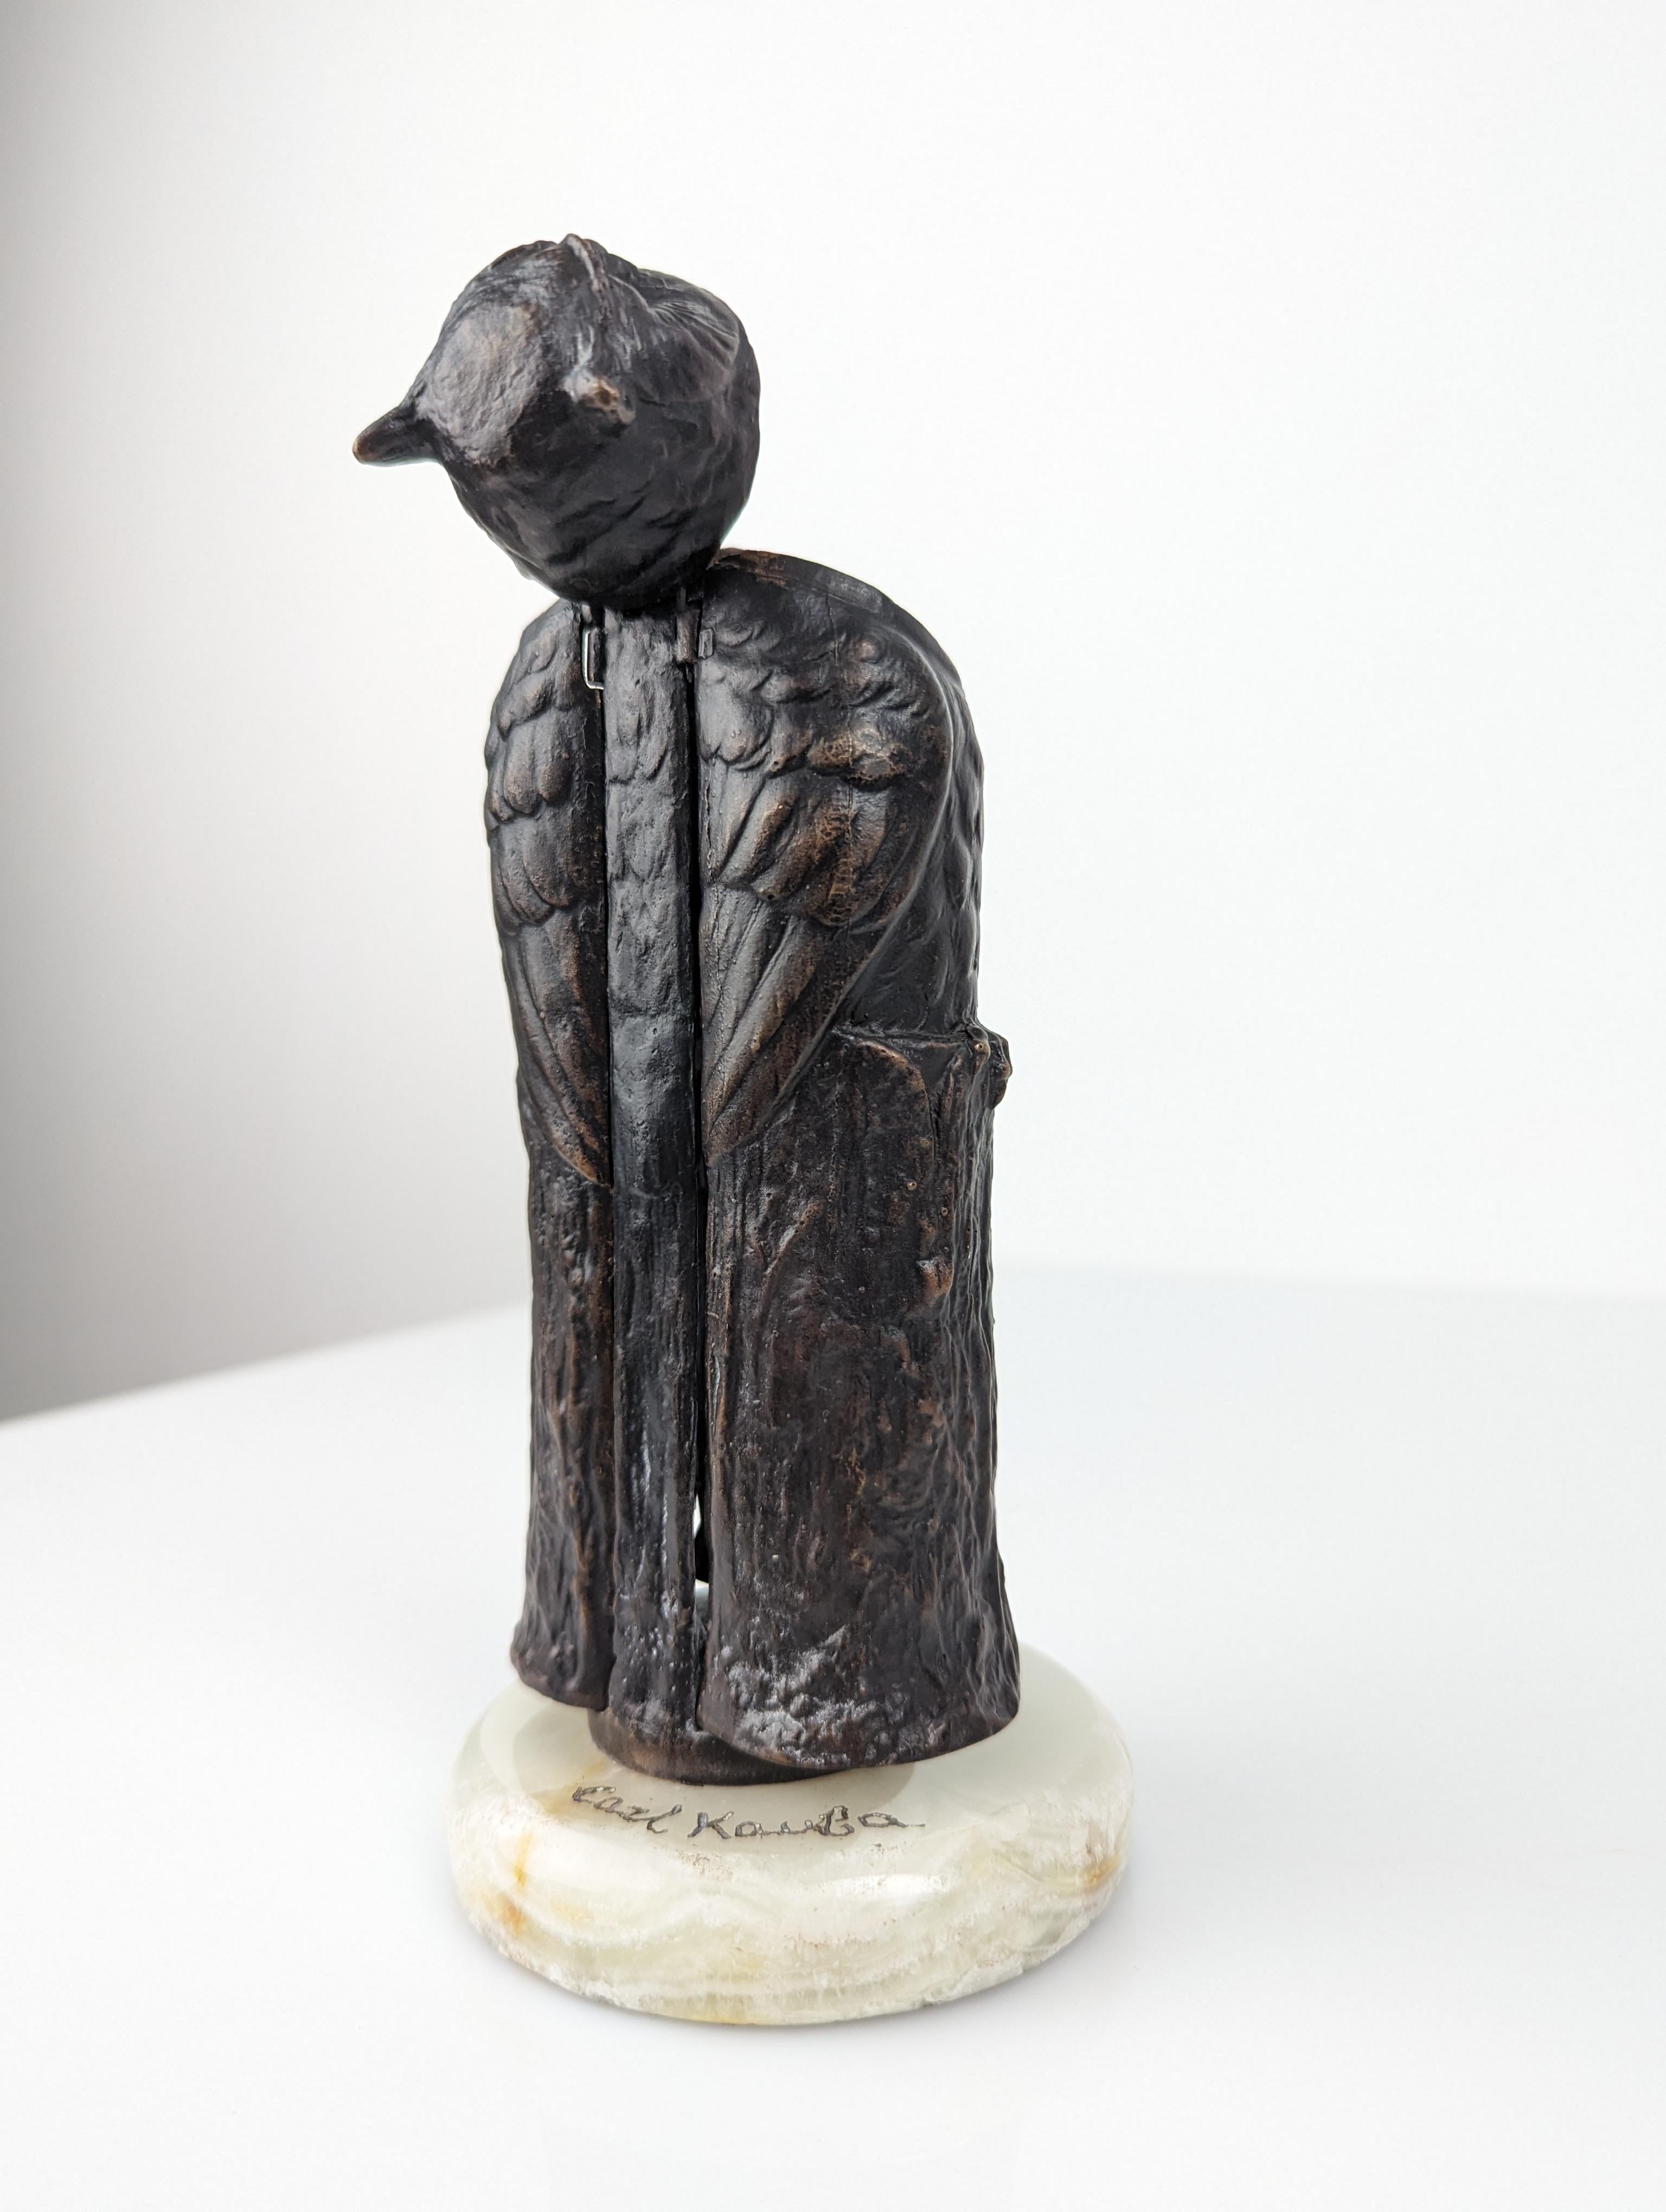 Owl Woman Sculpture by Carl Kauba, Vienna 2